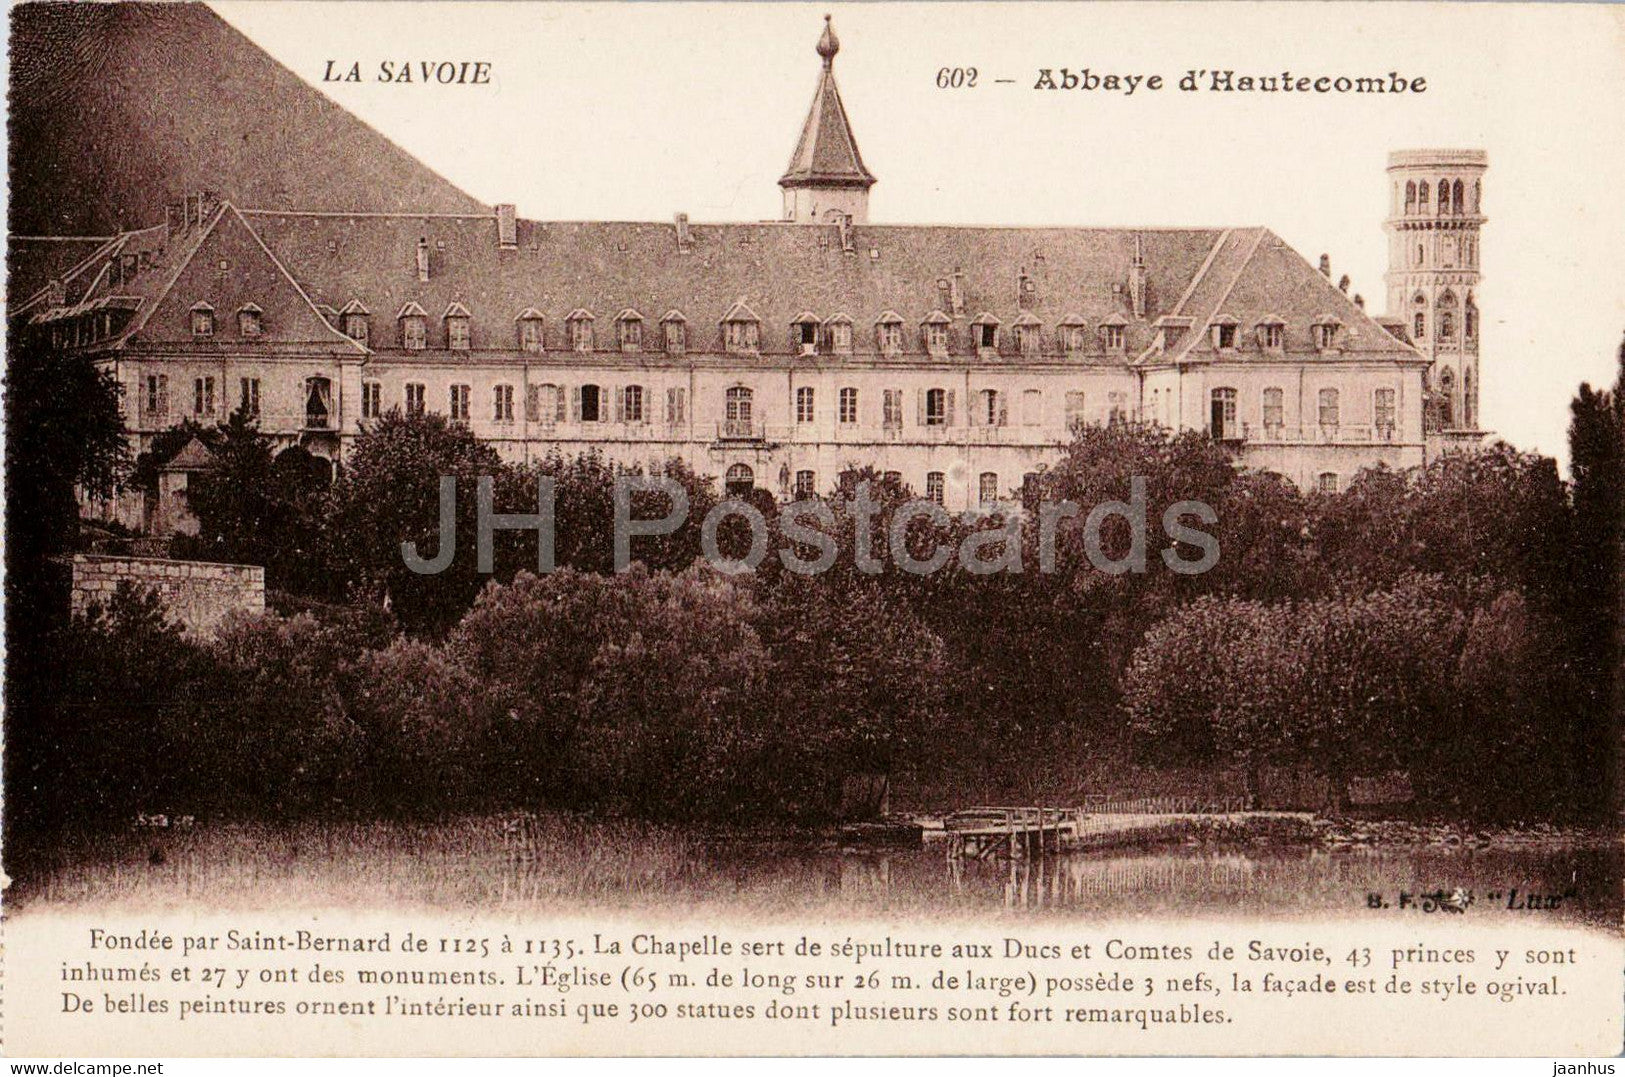 La Savoie - Abbaye d'Hautecombe - 602 - old postcard - France - unused - JH Postcards